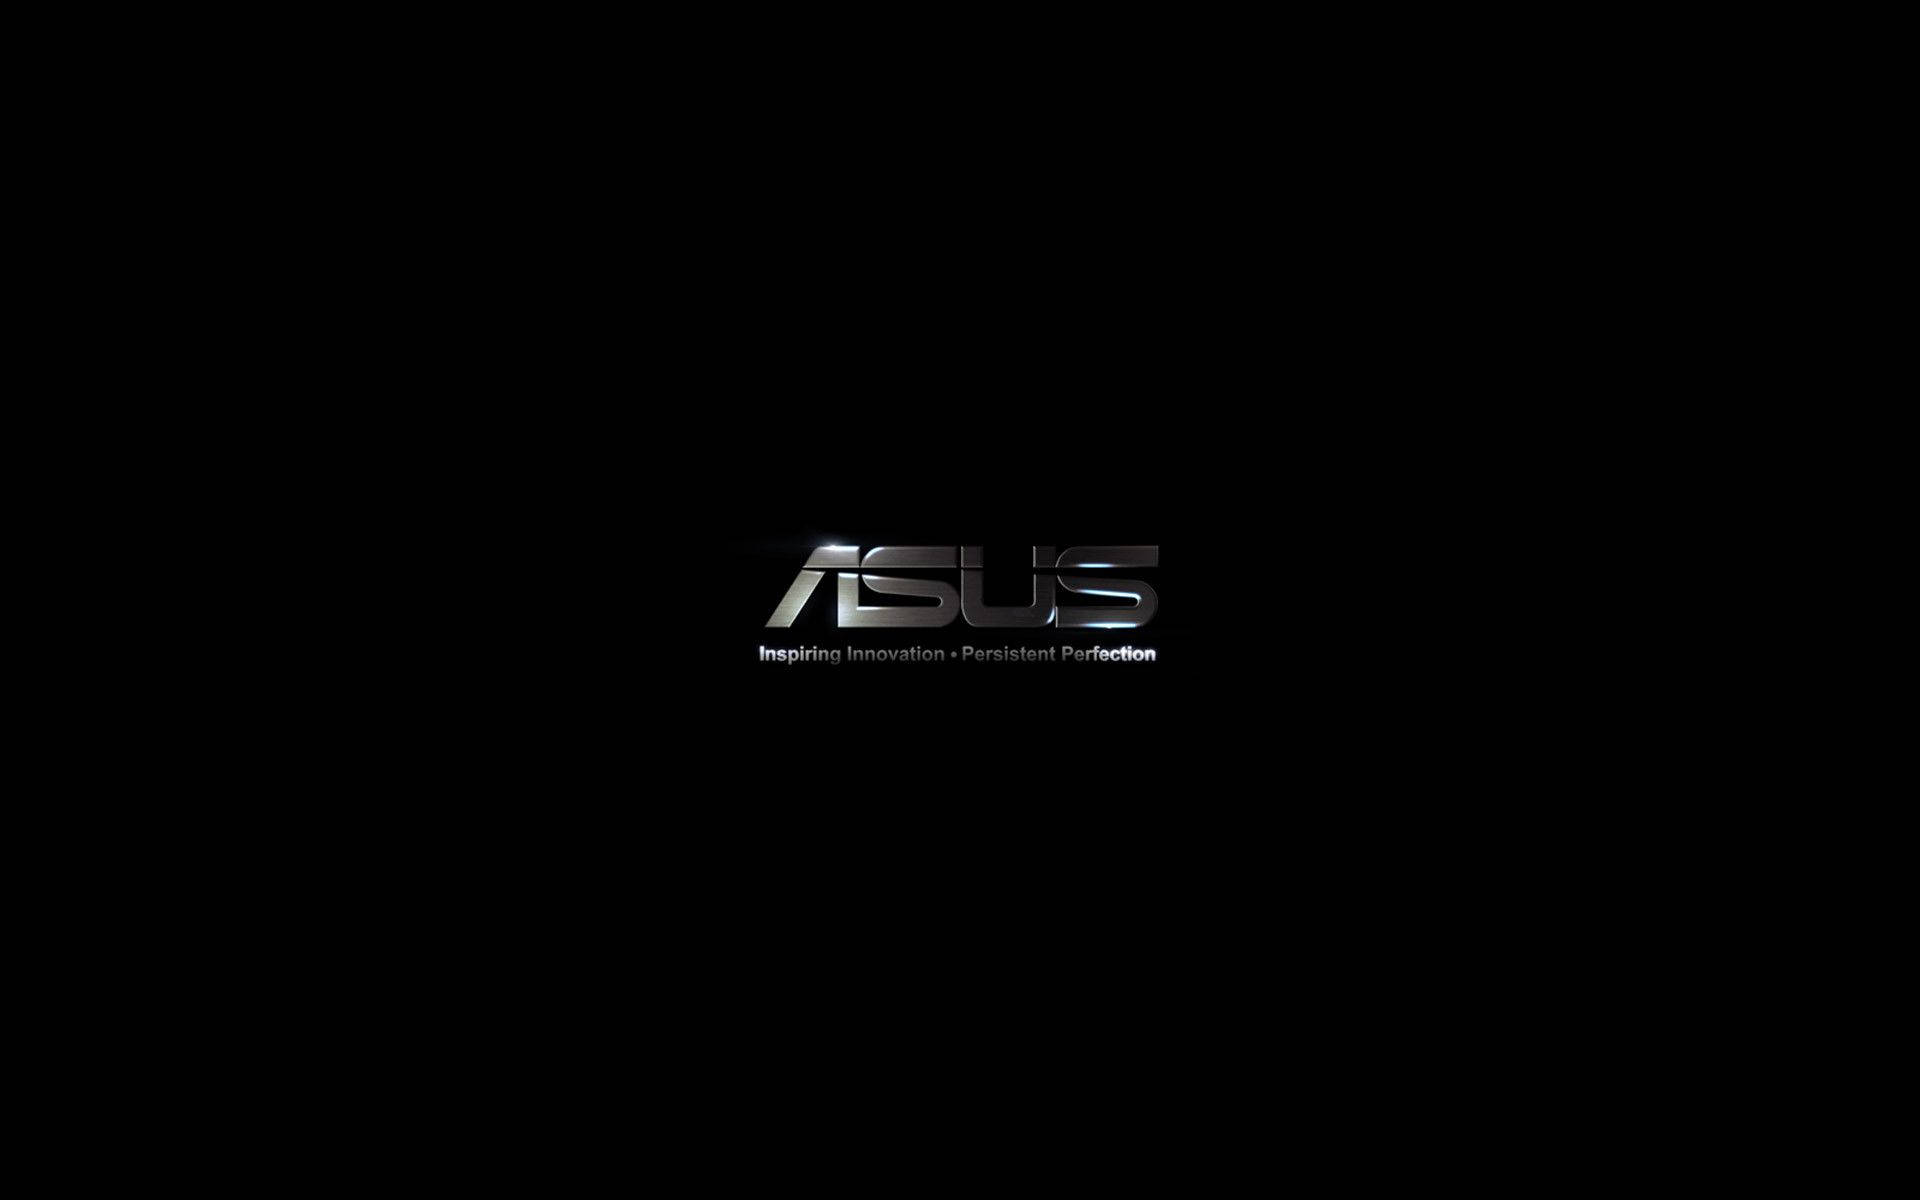 Asus Silver Logo Slogan Wallpaper